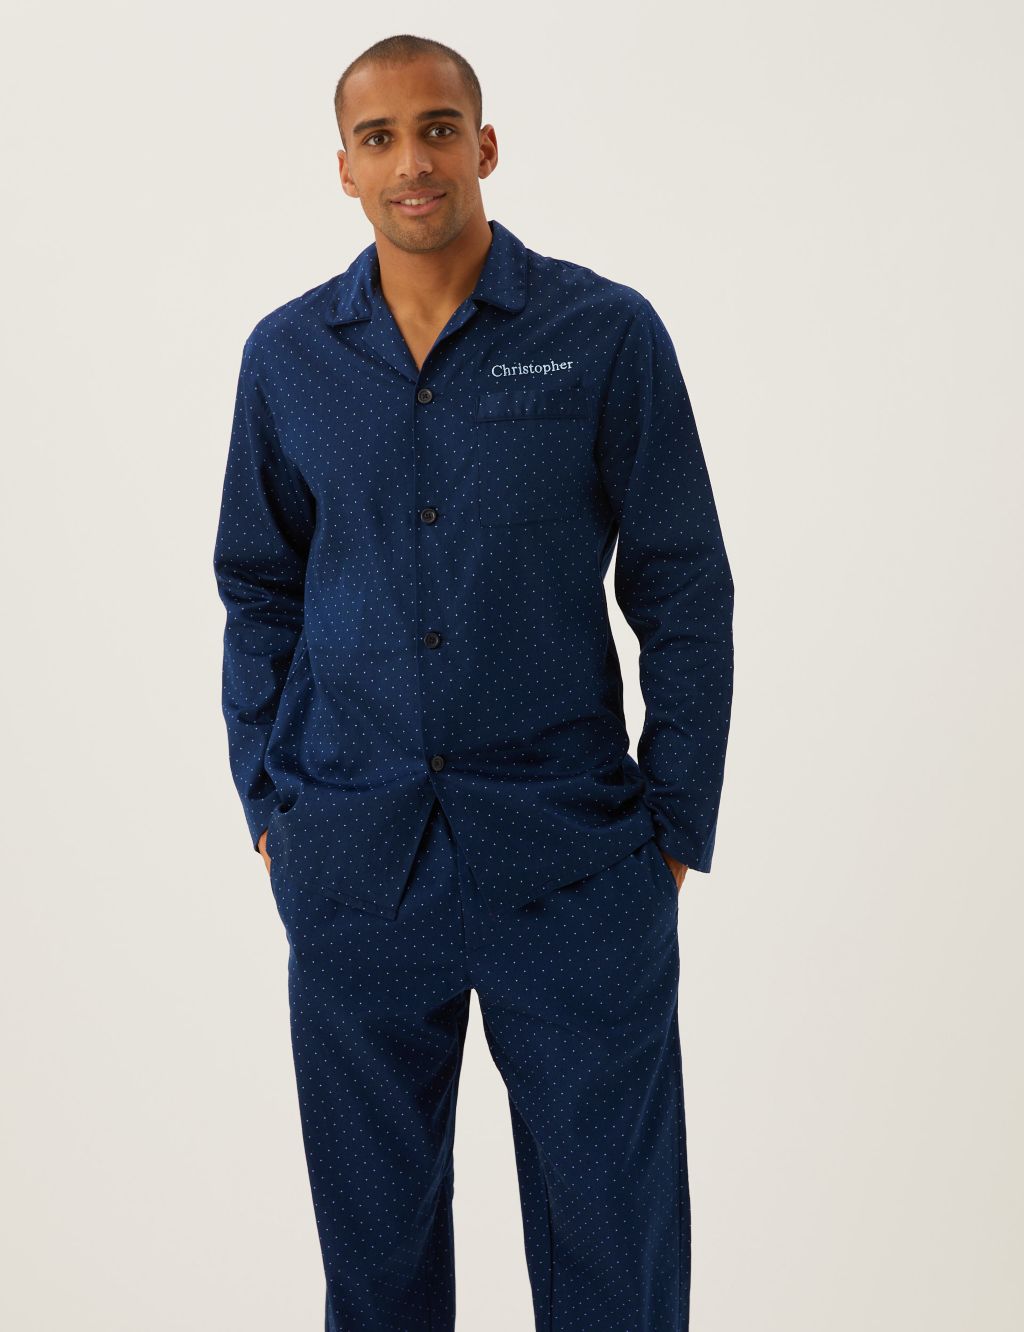 Personalised Men's Polka Dot Pyjama Set